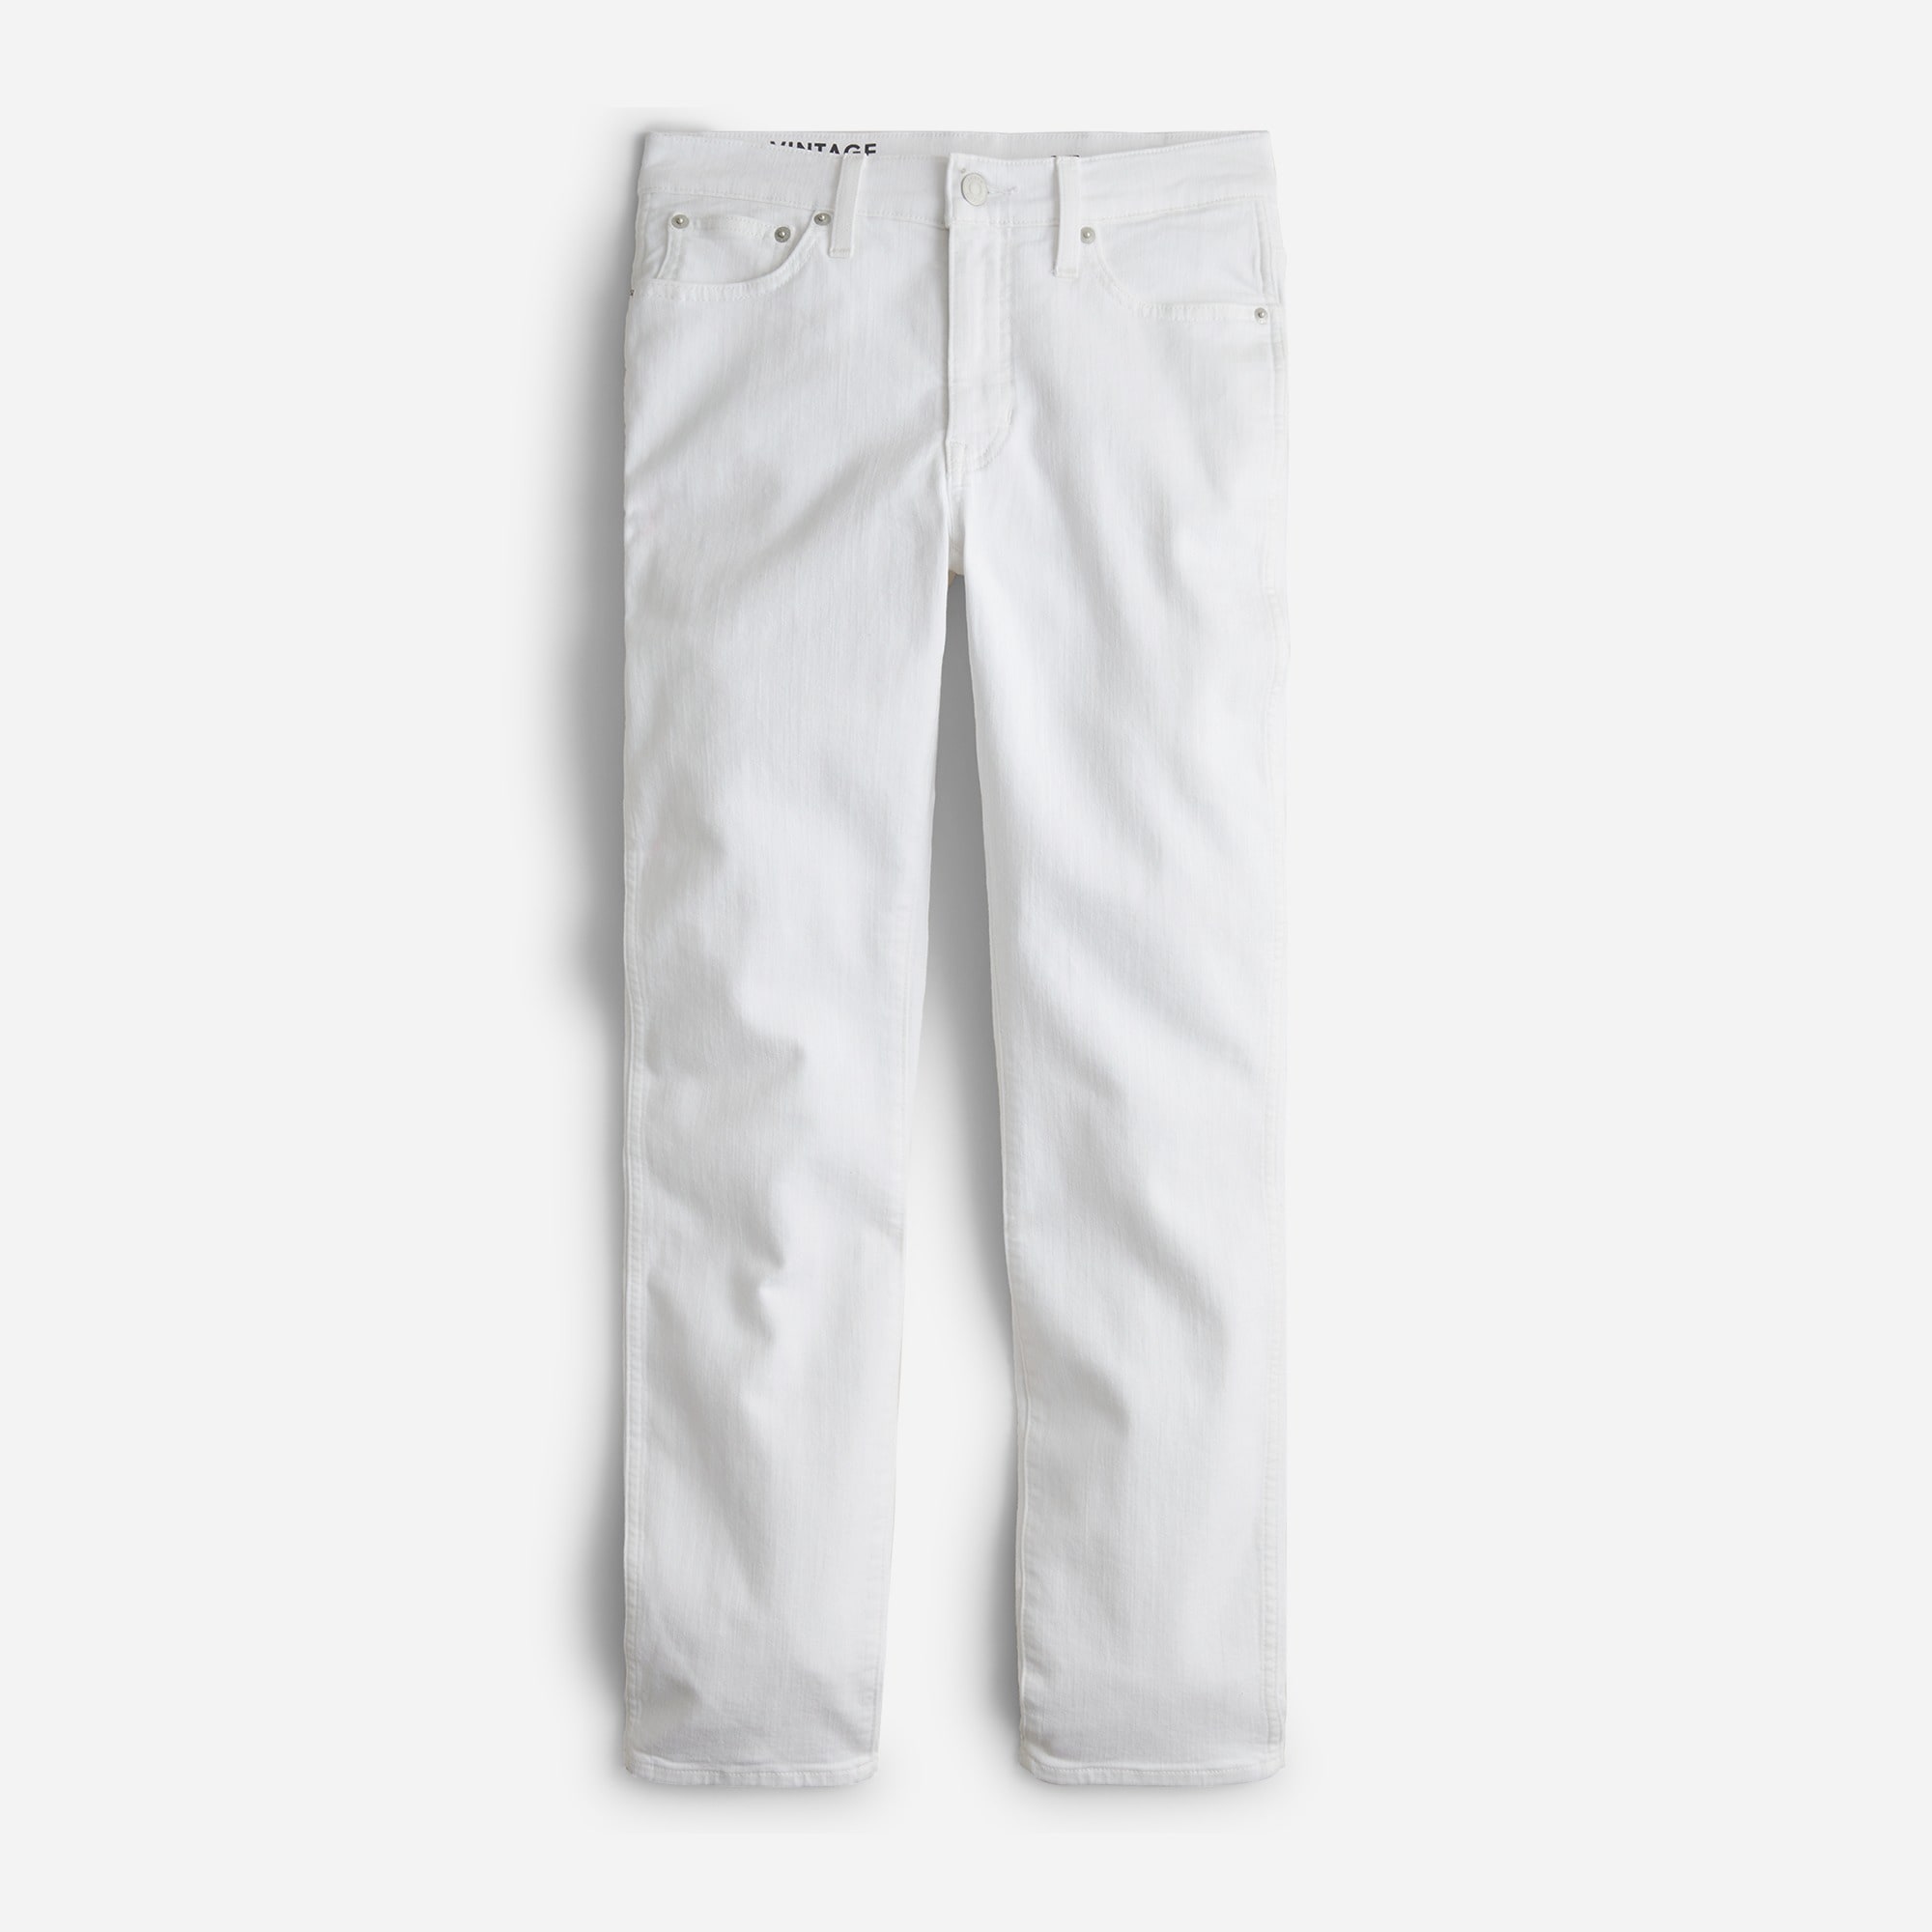  9" vintage slim-straight jean in white